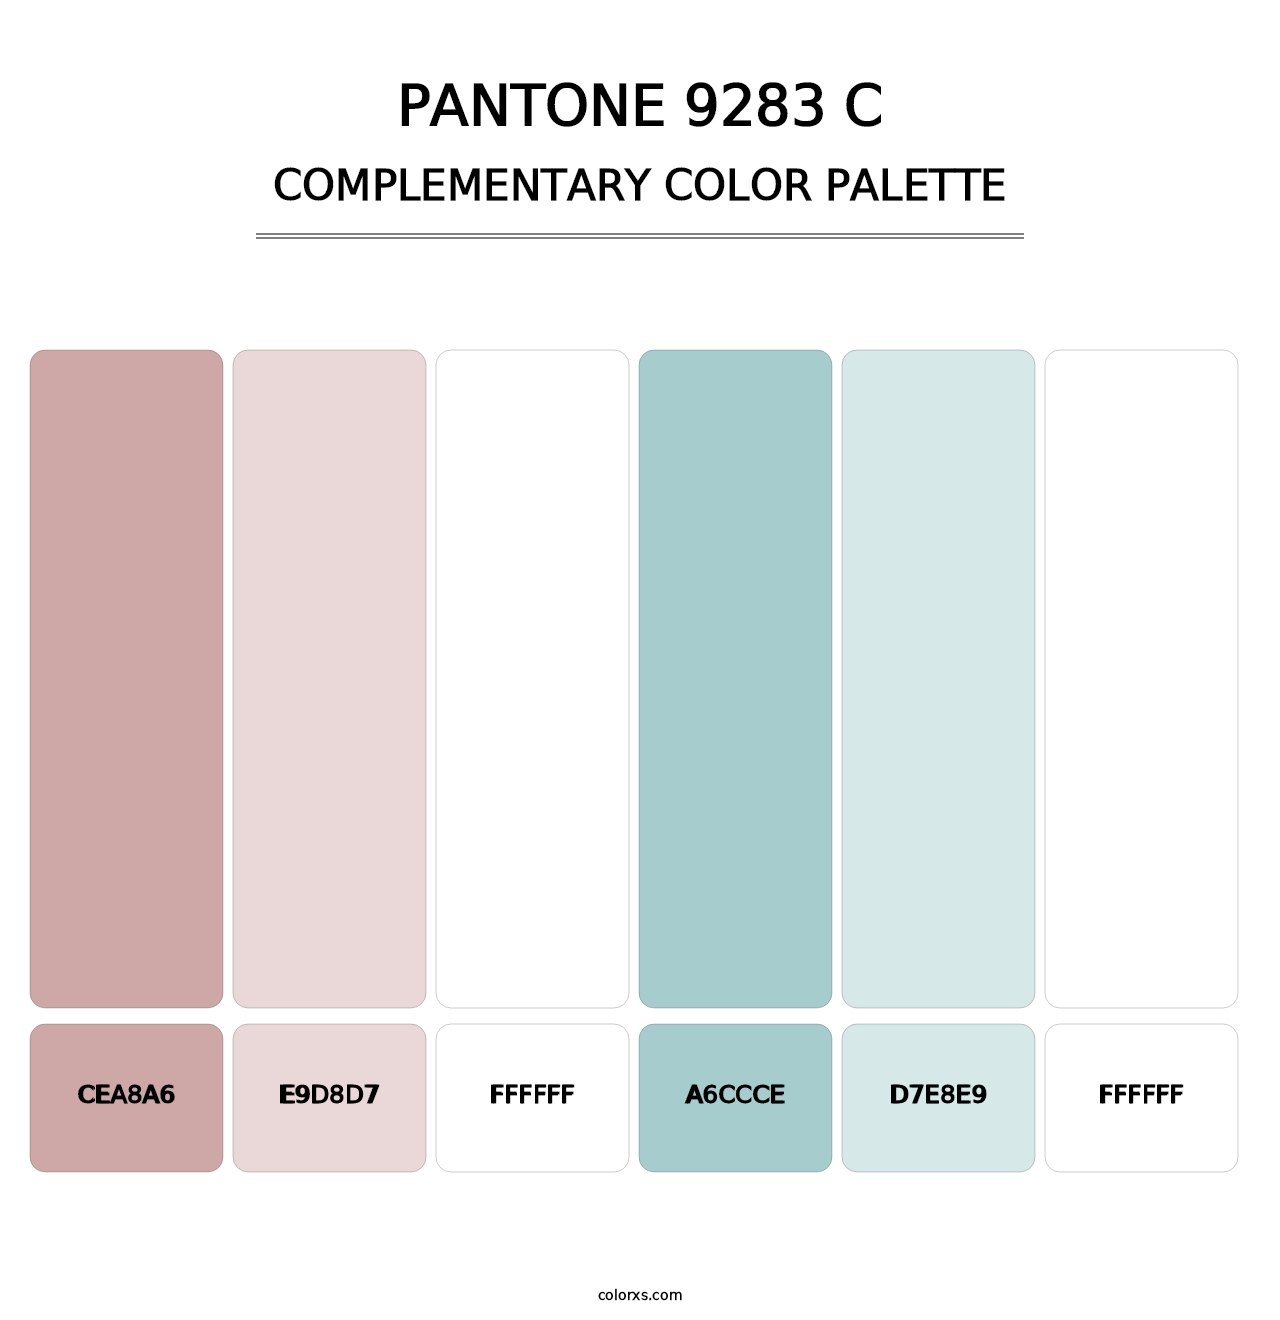 PANTONE 9283 C - Complementary Color Palette